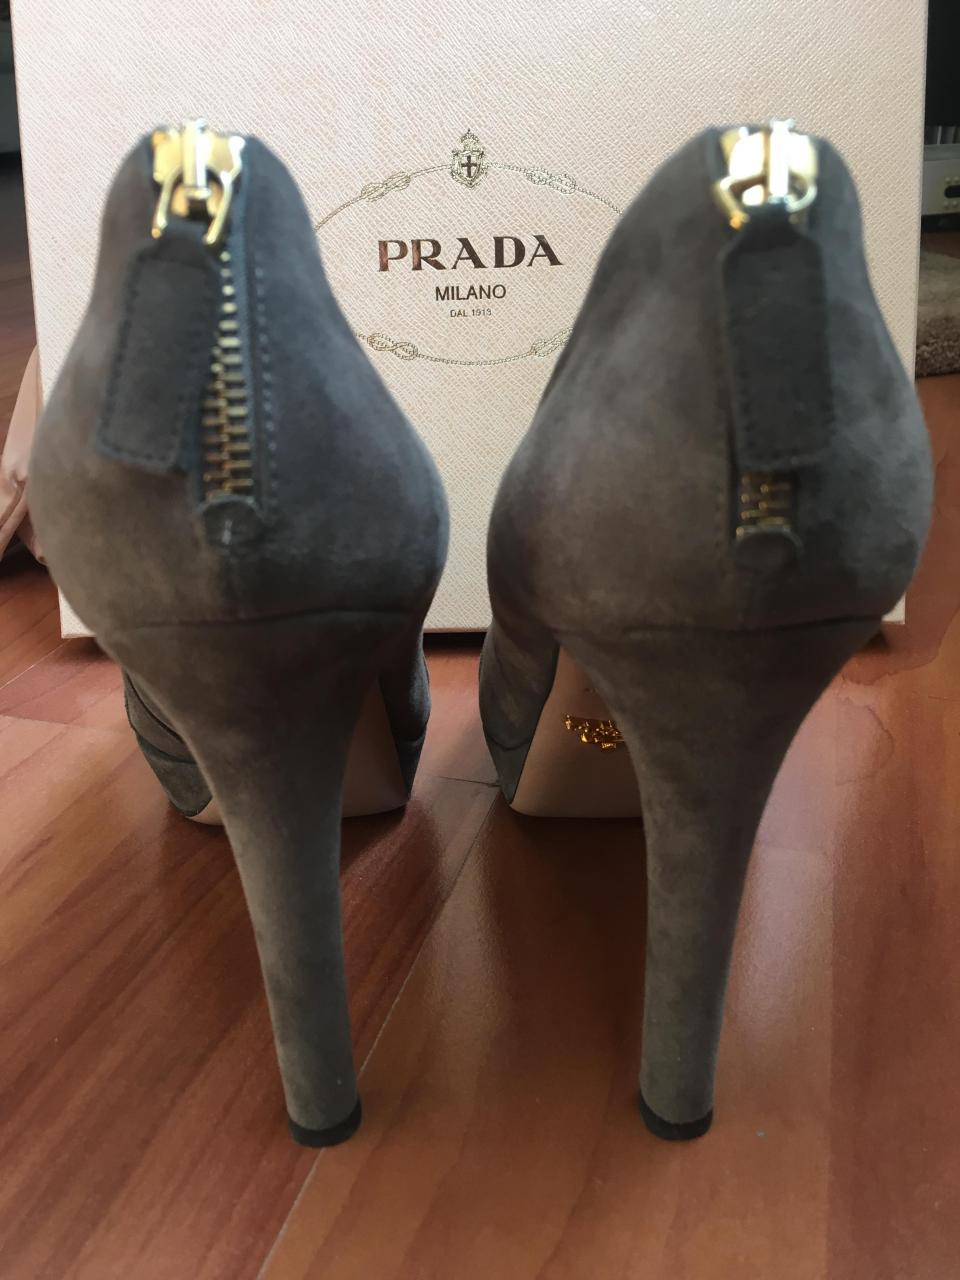 prada-grey-calzature-donna-camoscio-2-pumps-size-eu-40-approx-us-10